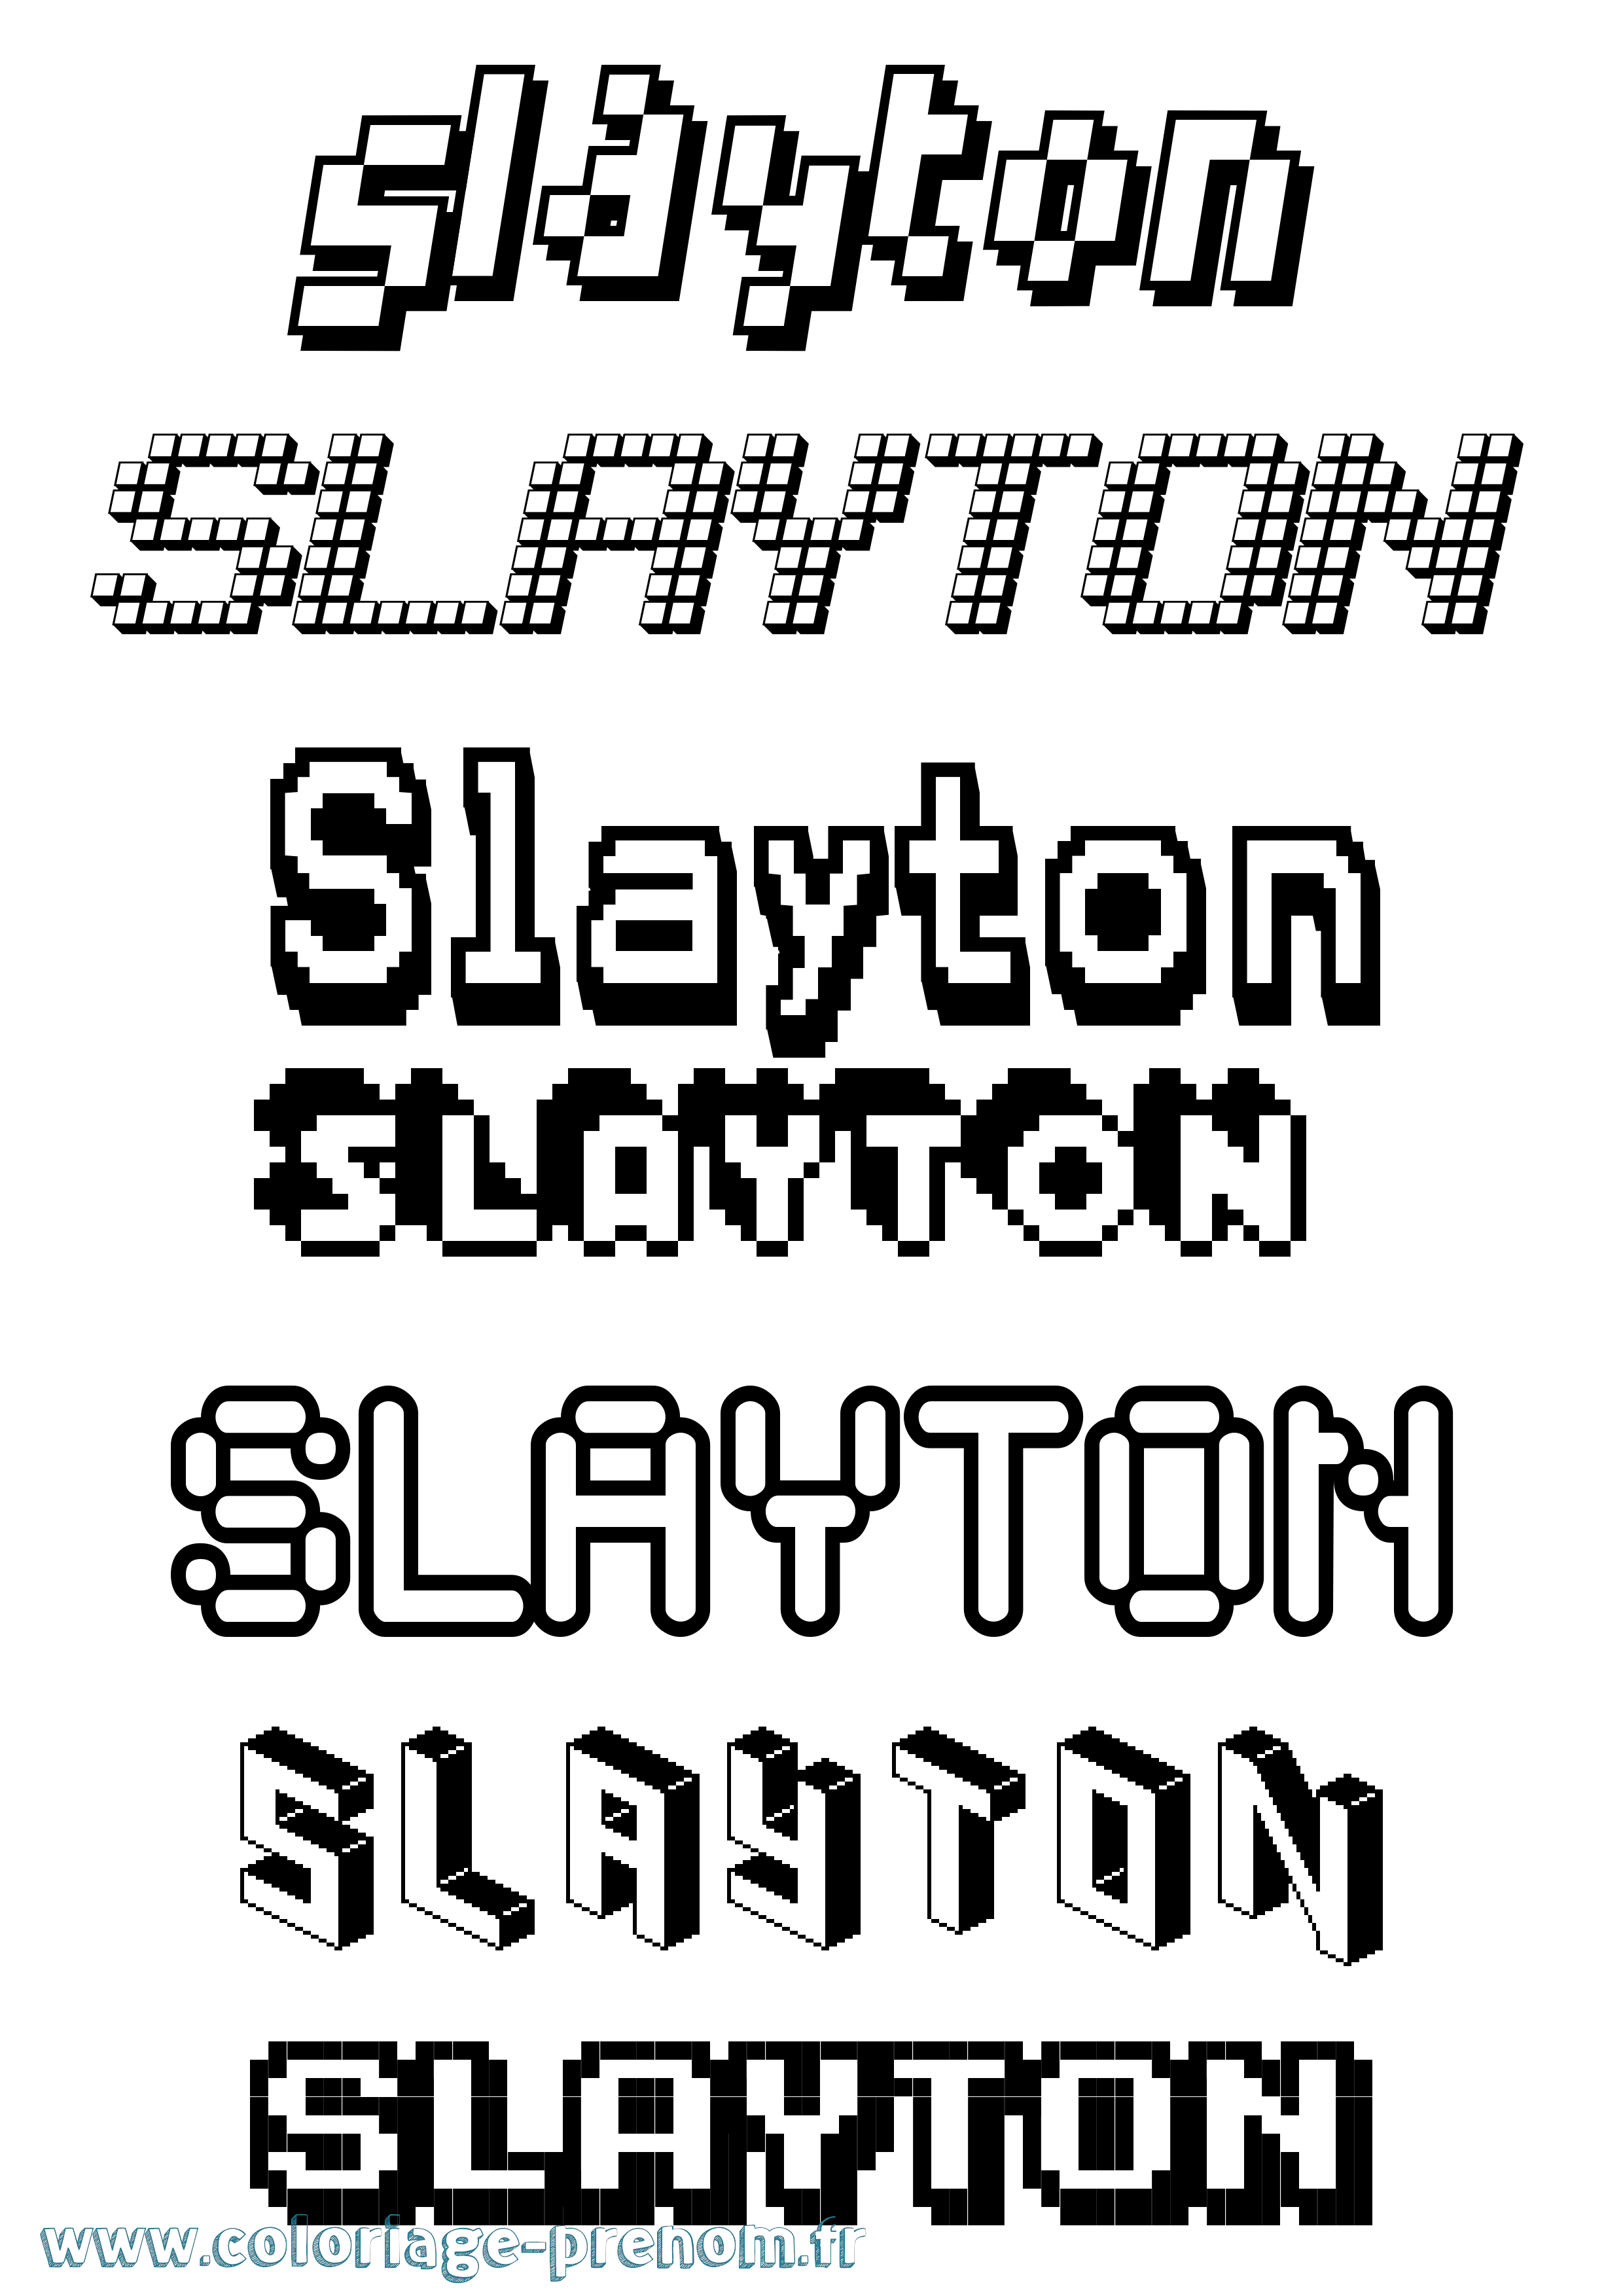 Coloriage prénom Slayton Pixel